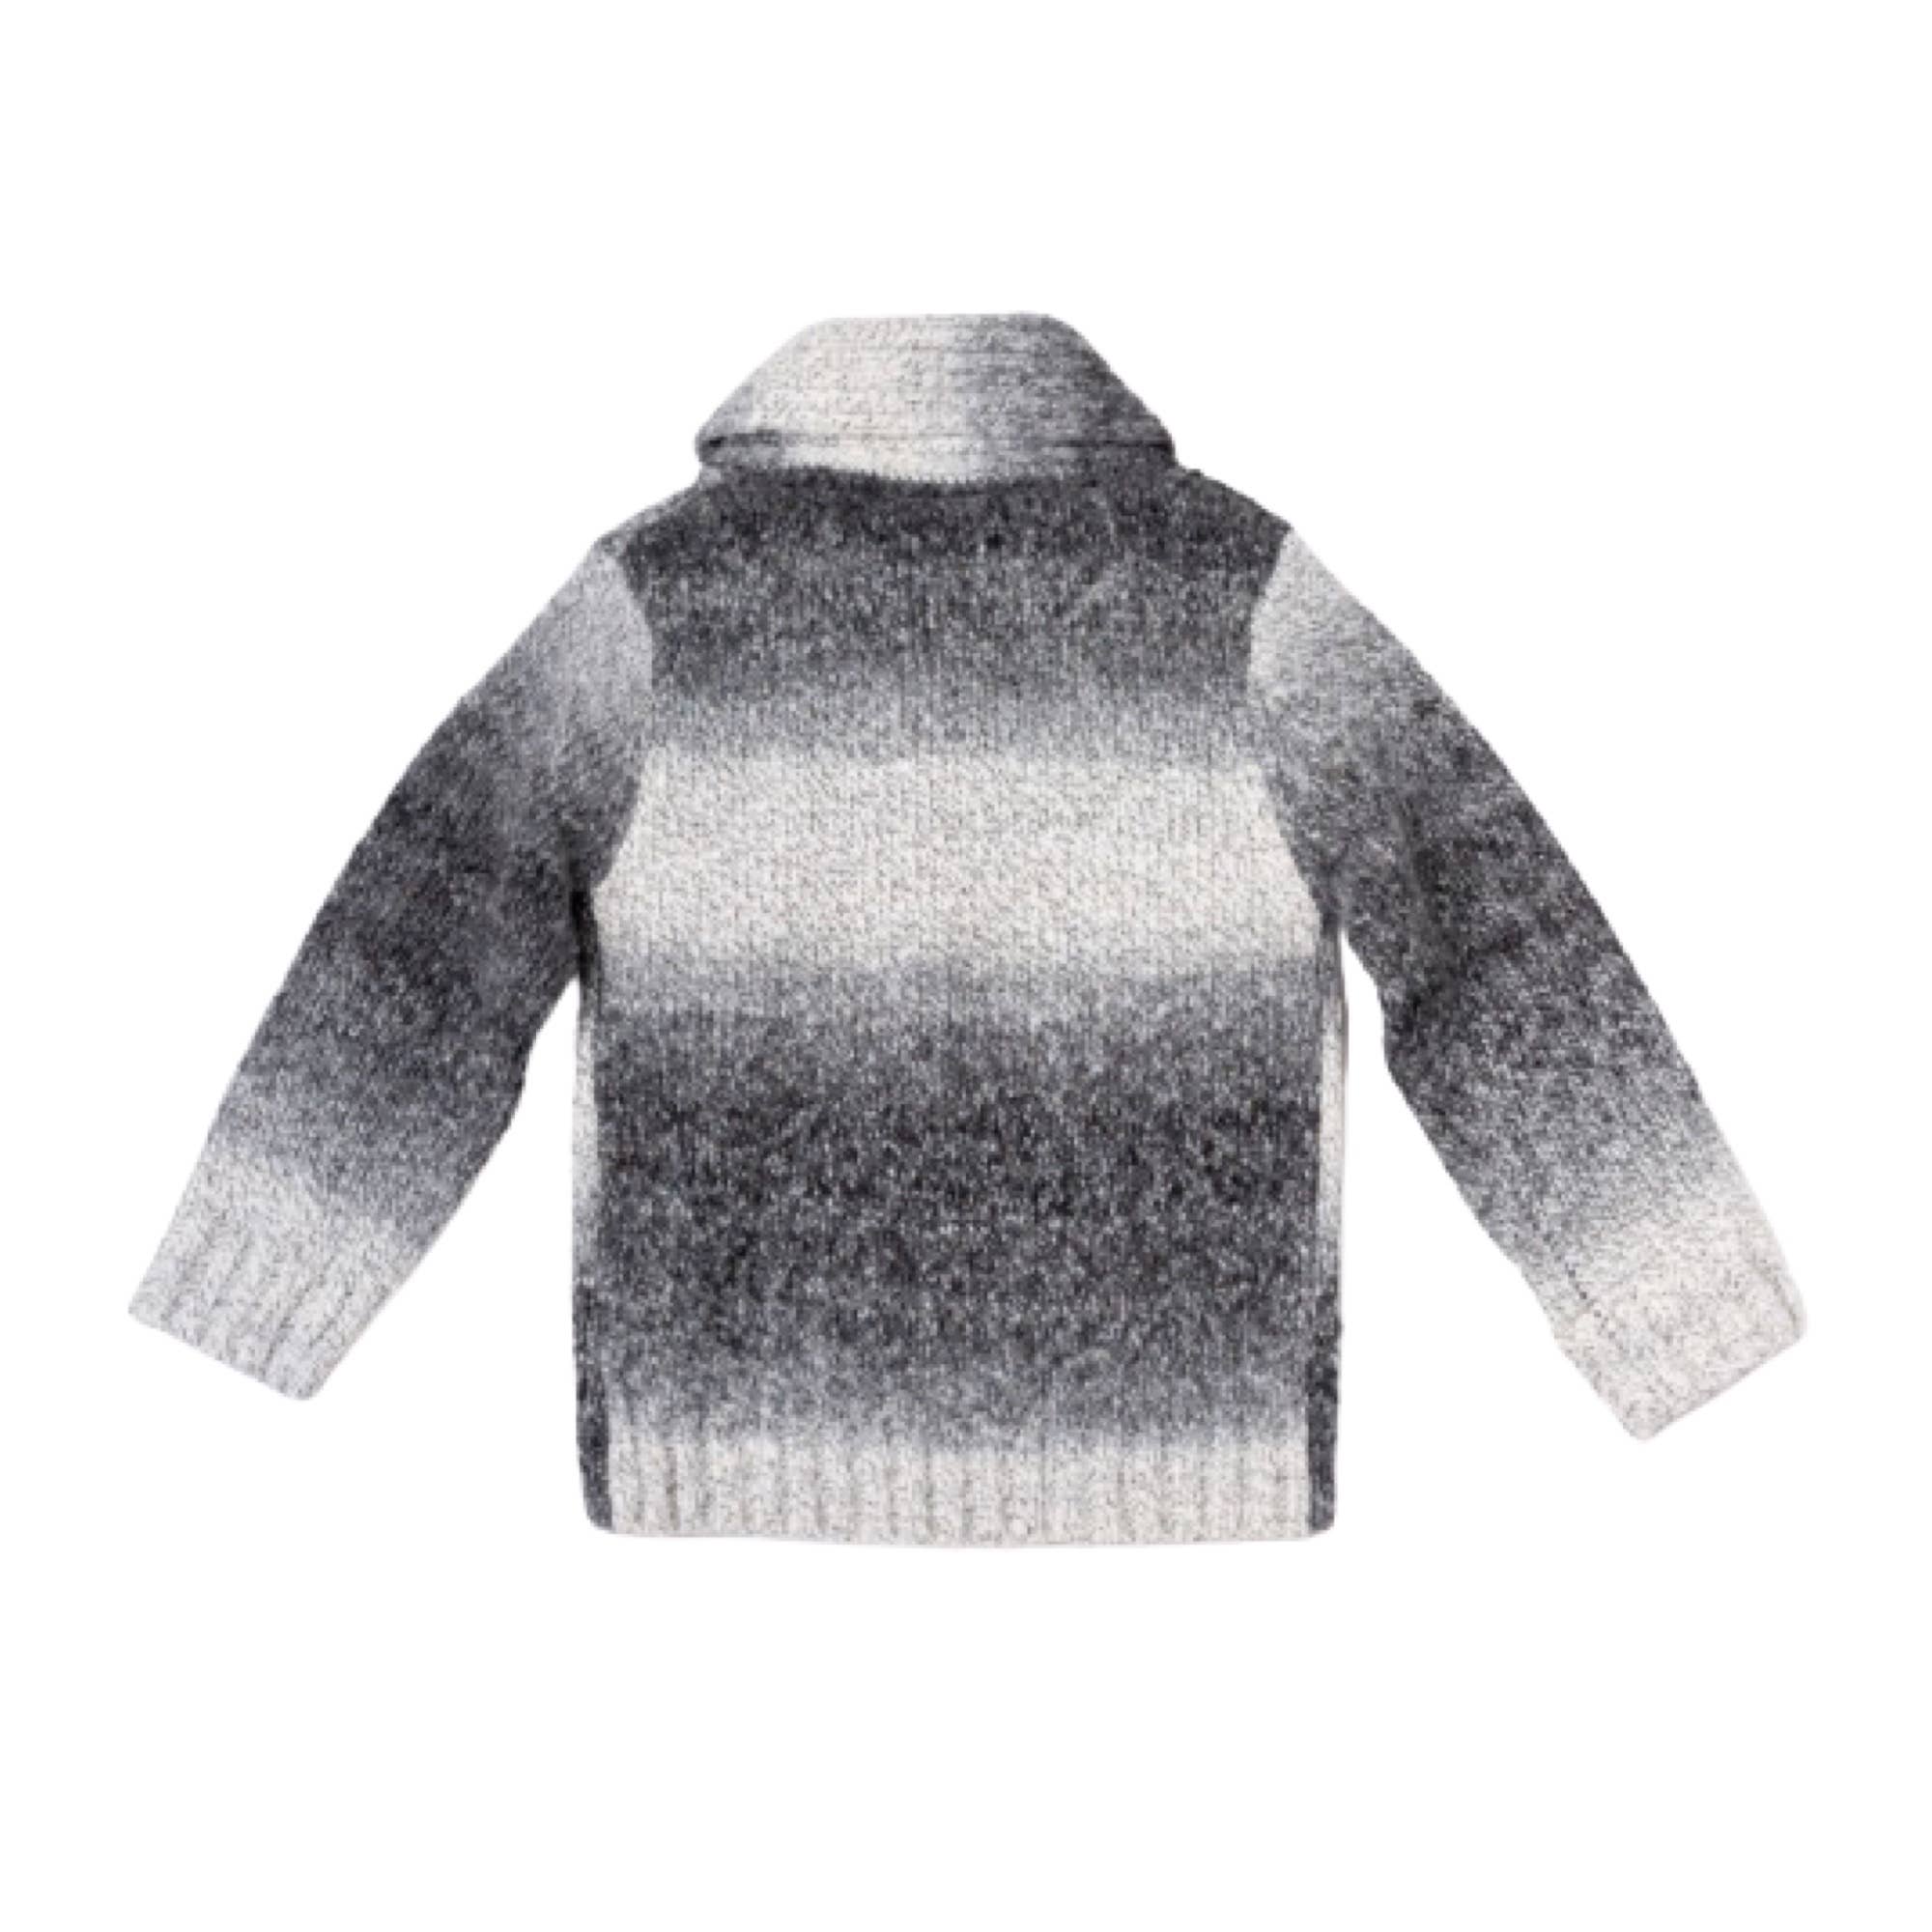 Bear Camp Yarn Dye Sweater